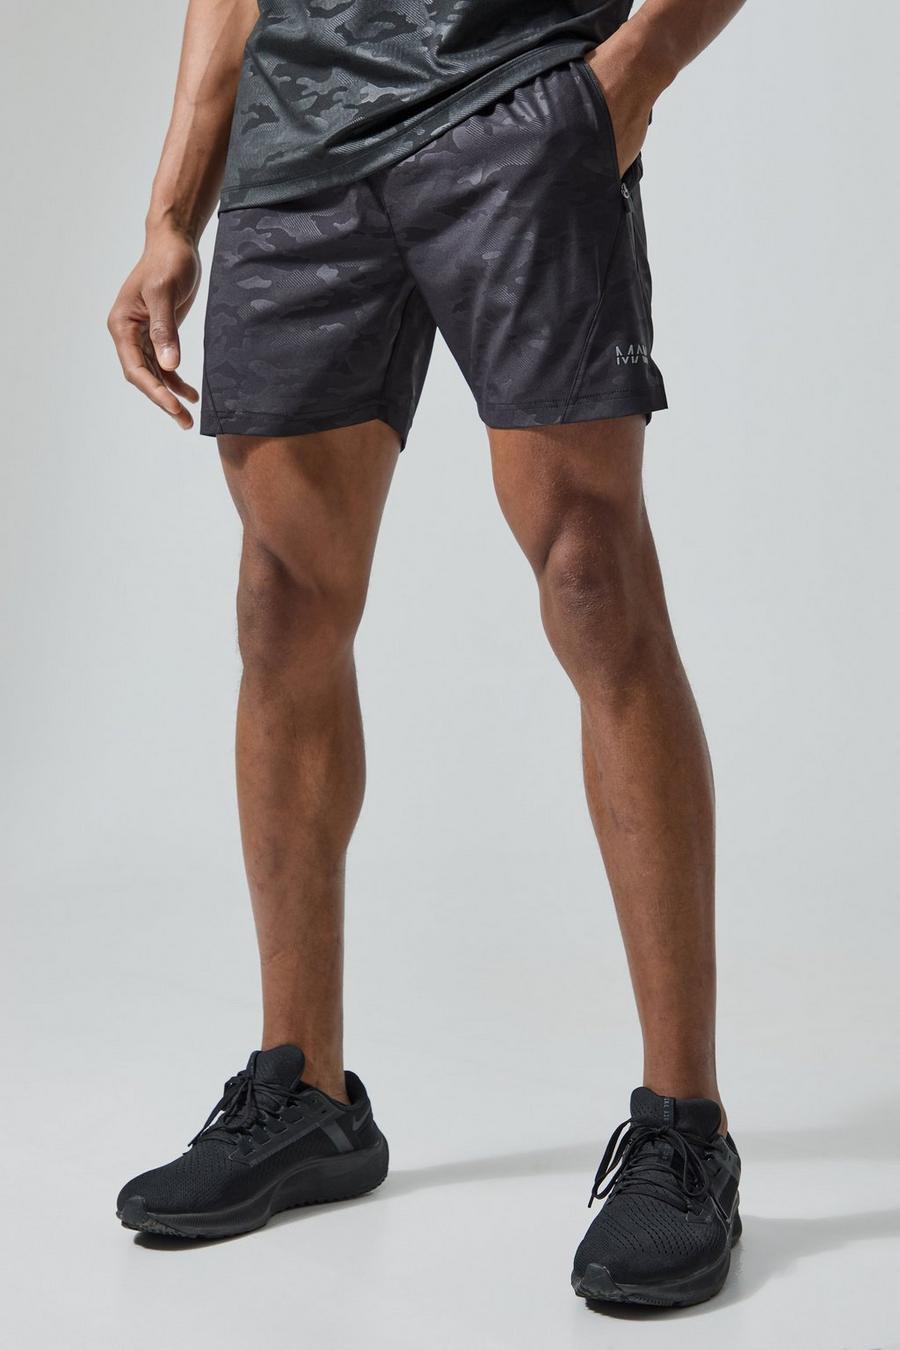 Black MAN Active Kamouflagemönstrade shorts (5 tum).